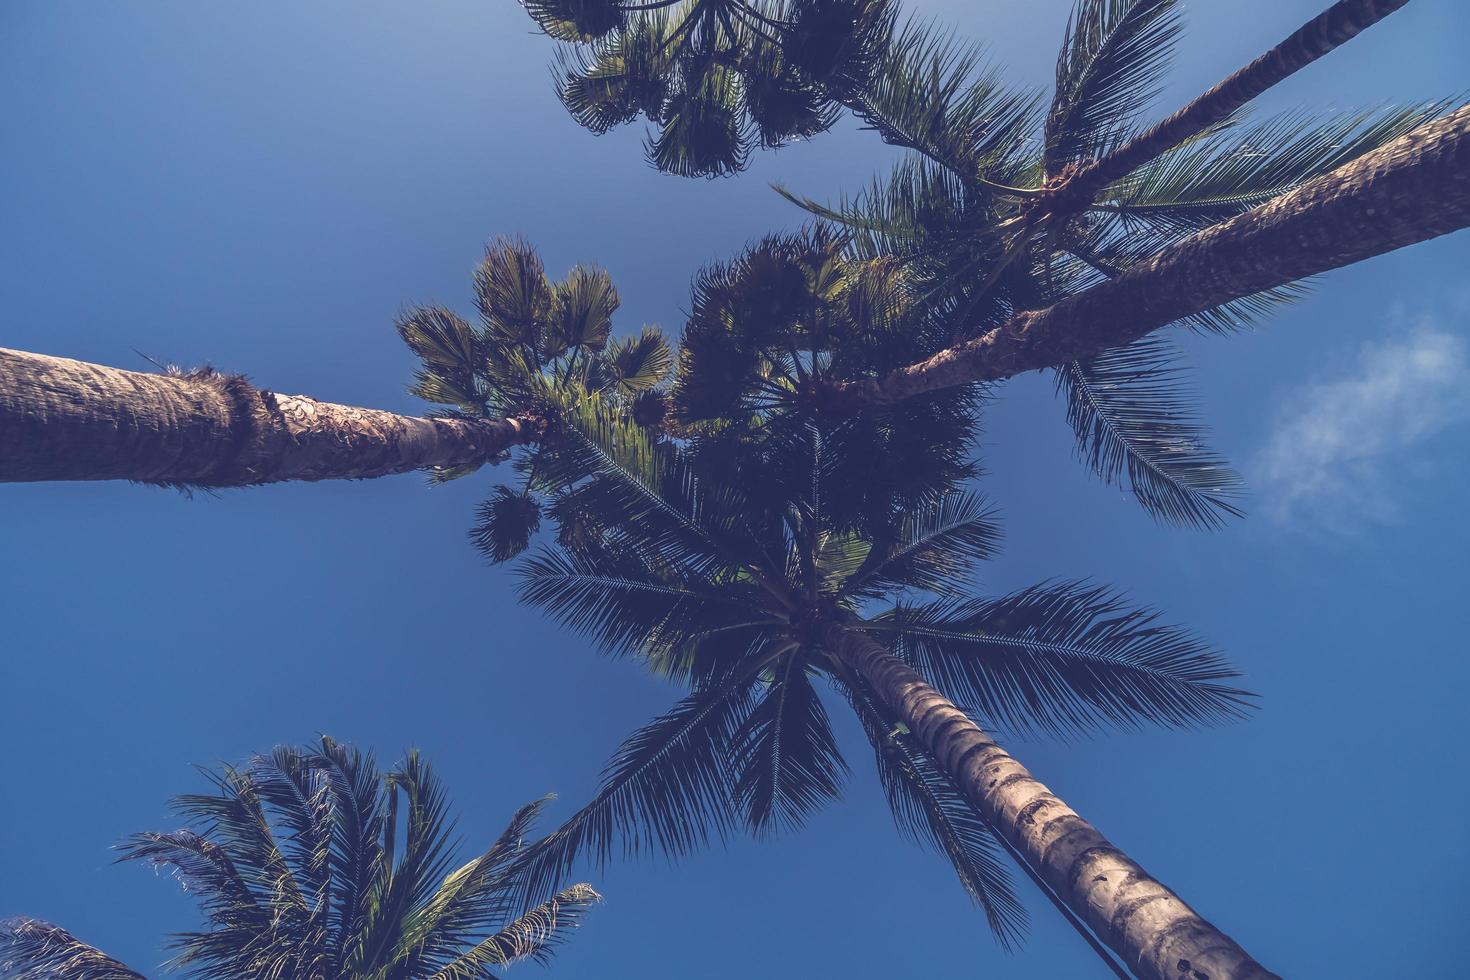 tropische kokospalmen foto